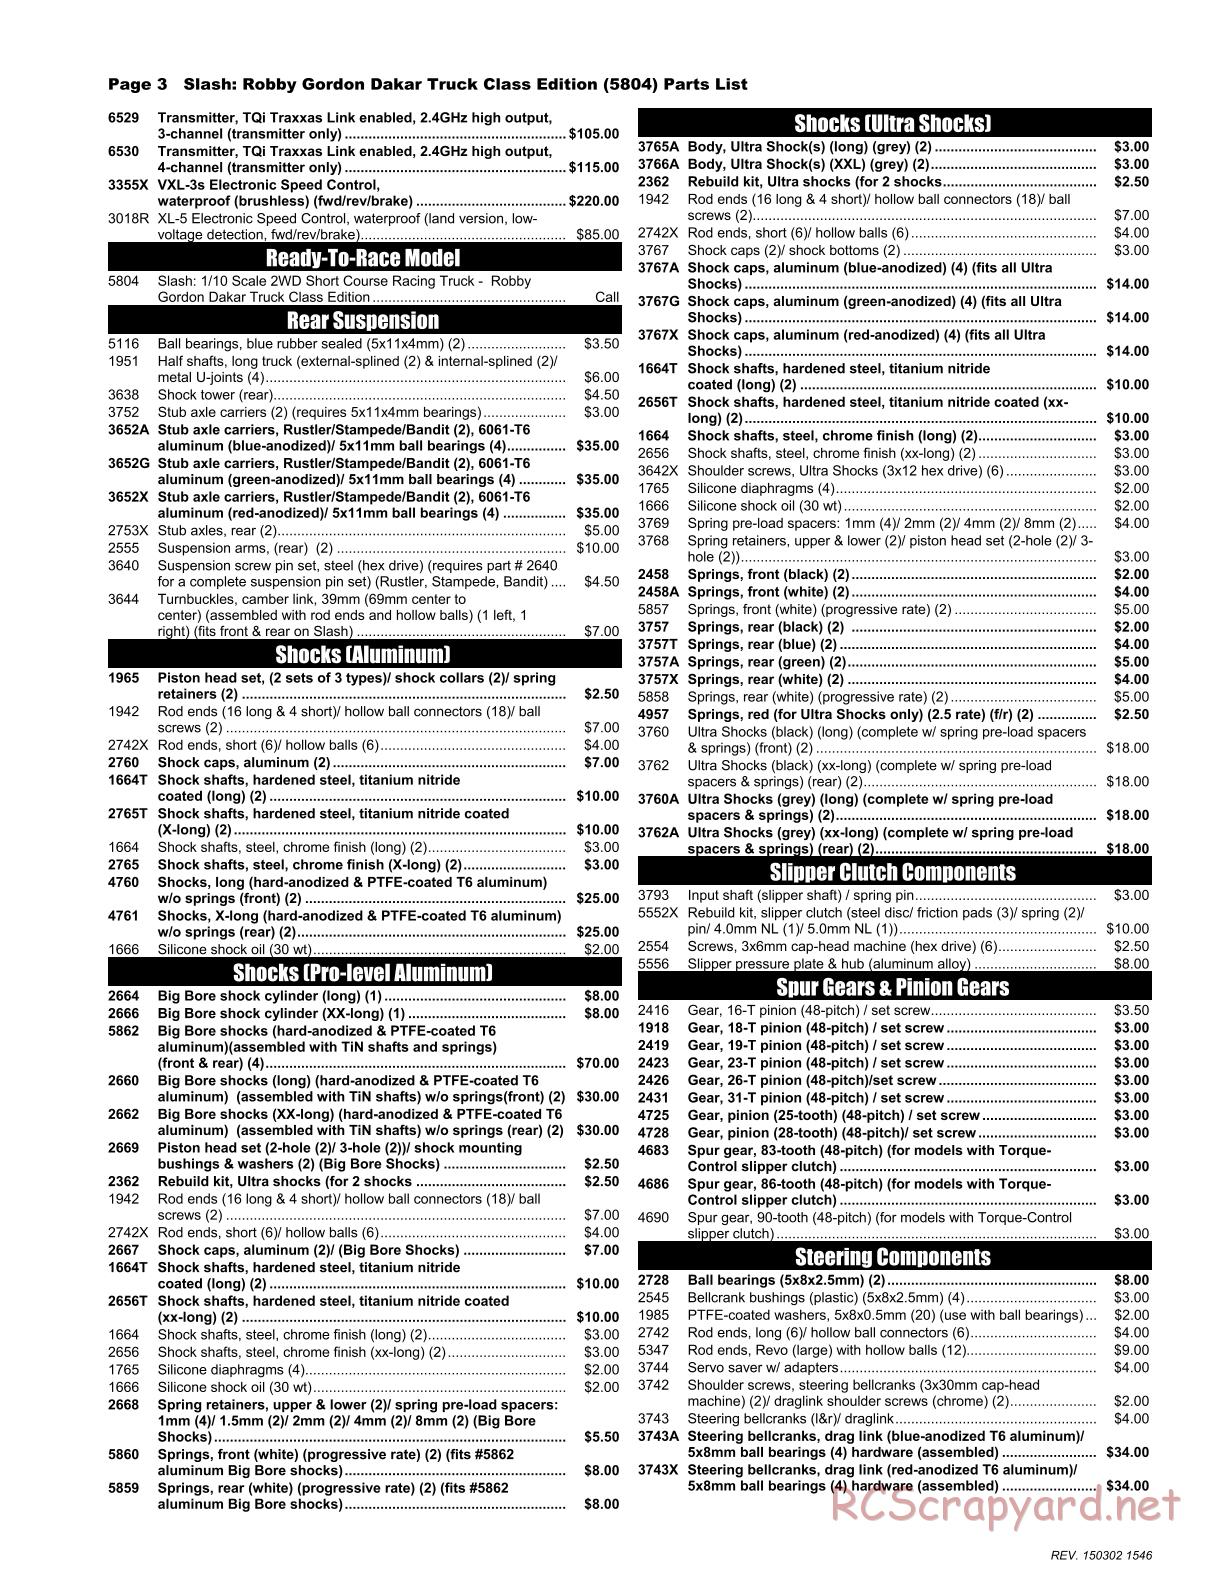 Traxxas - Slash 2WD Robby Gordon Dakar Ed (2012) - Parts List - Page 3